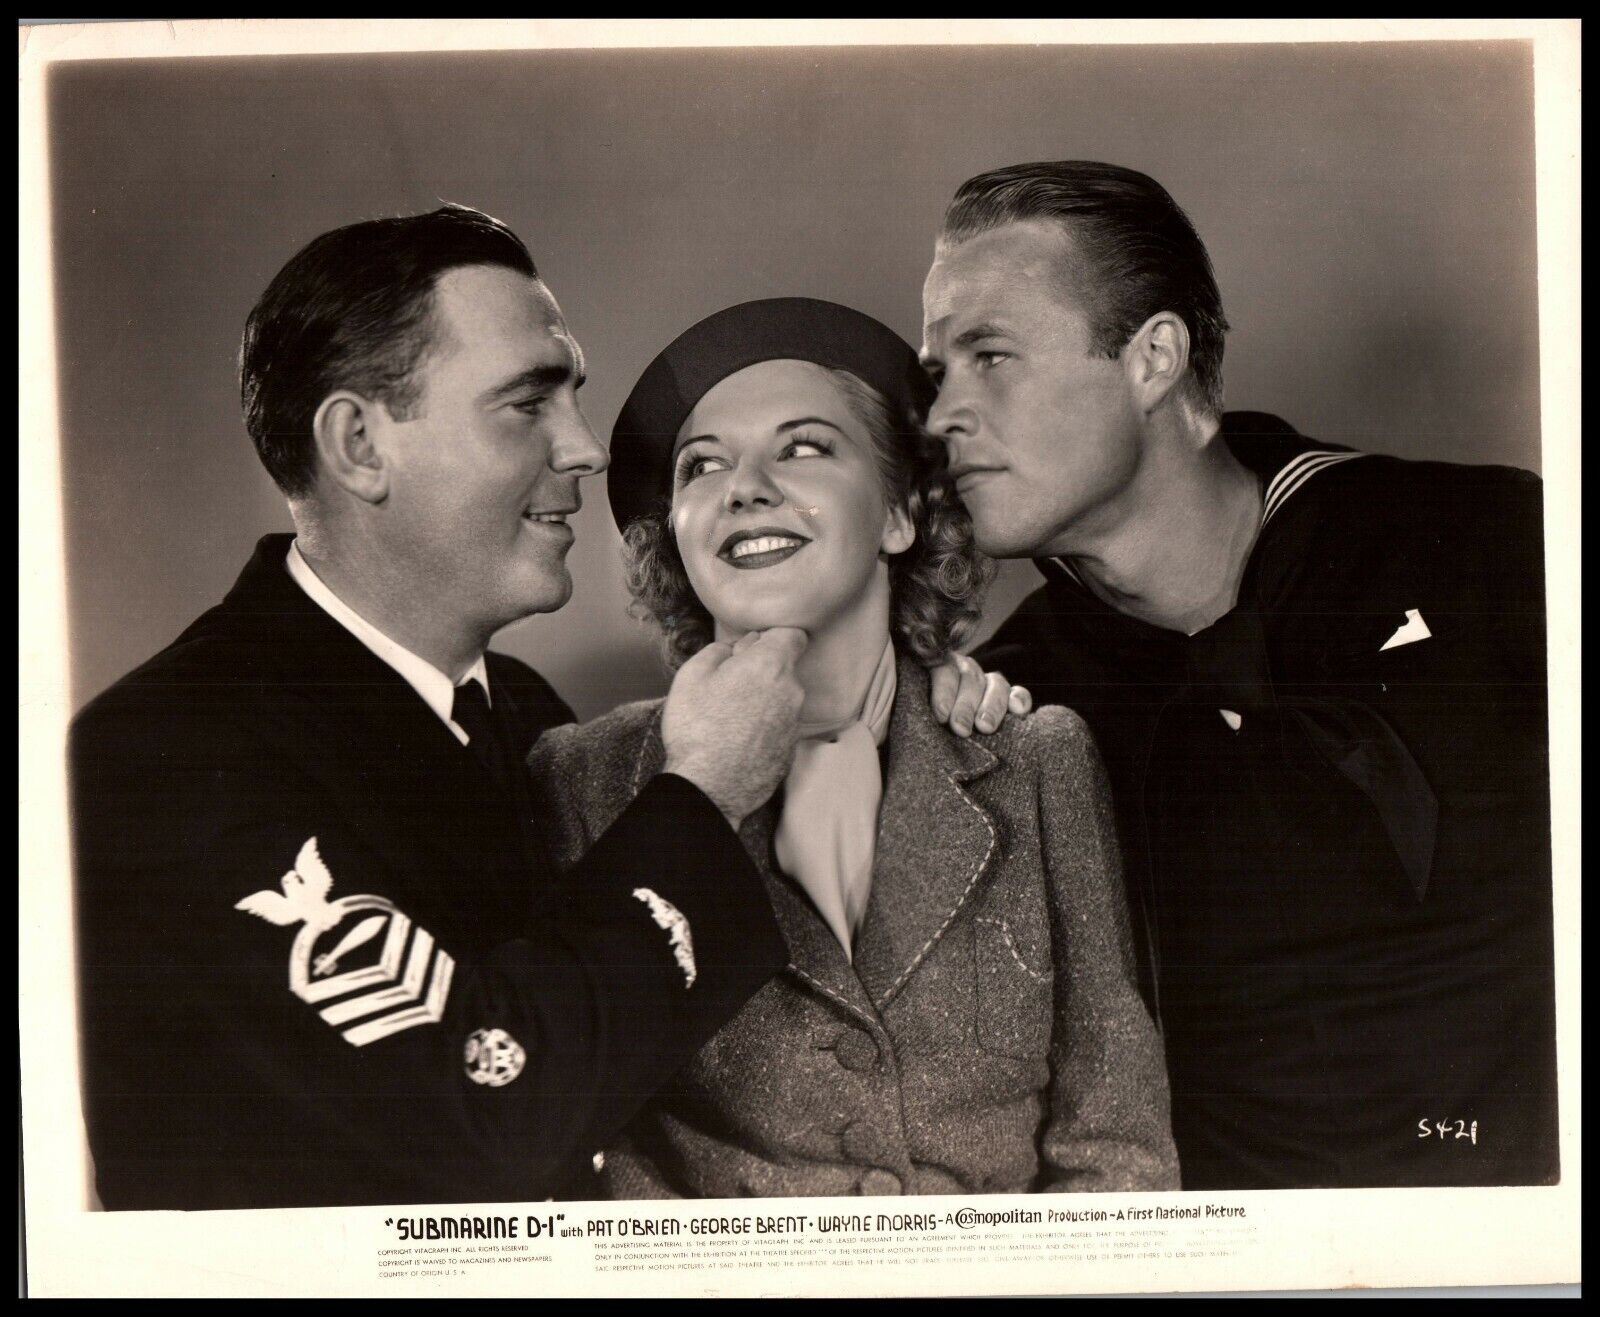 Pat O'Brien + Wayne Morris + Doris Weston in Submarine D-1 (1937) PHOTO M 68